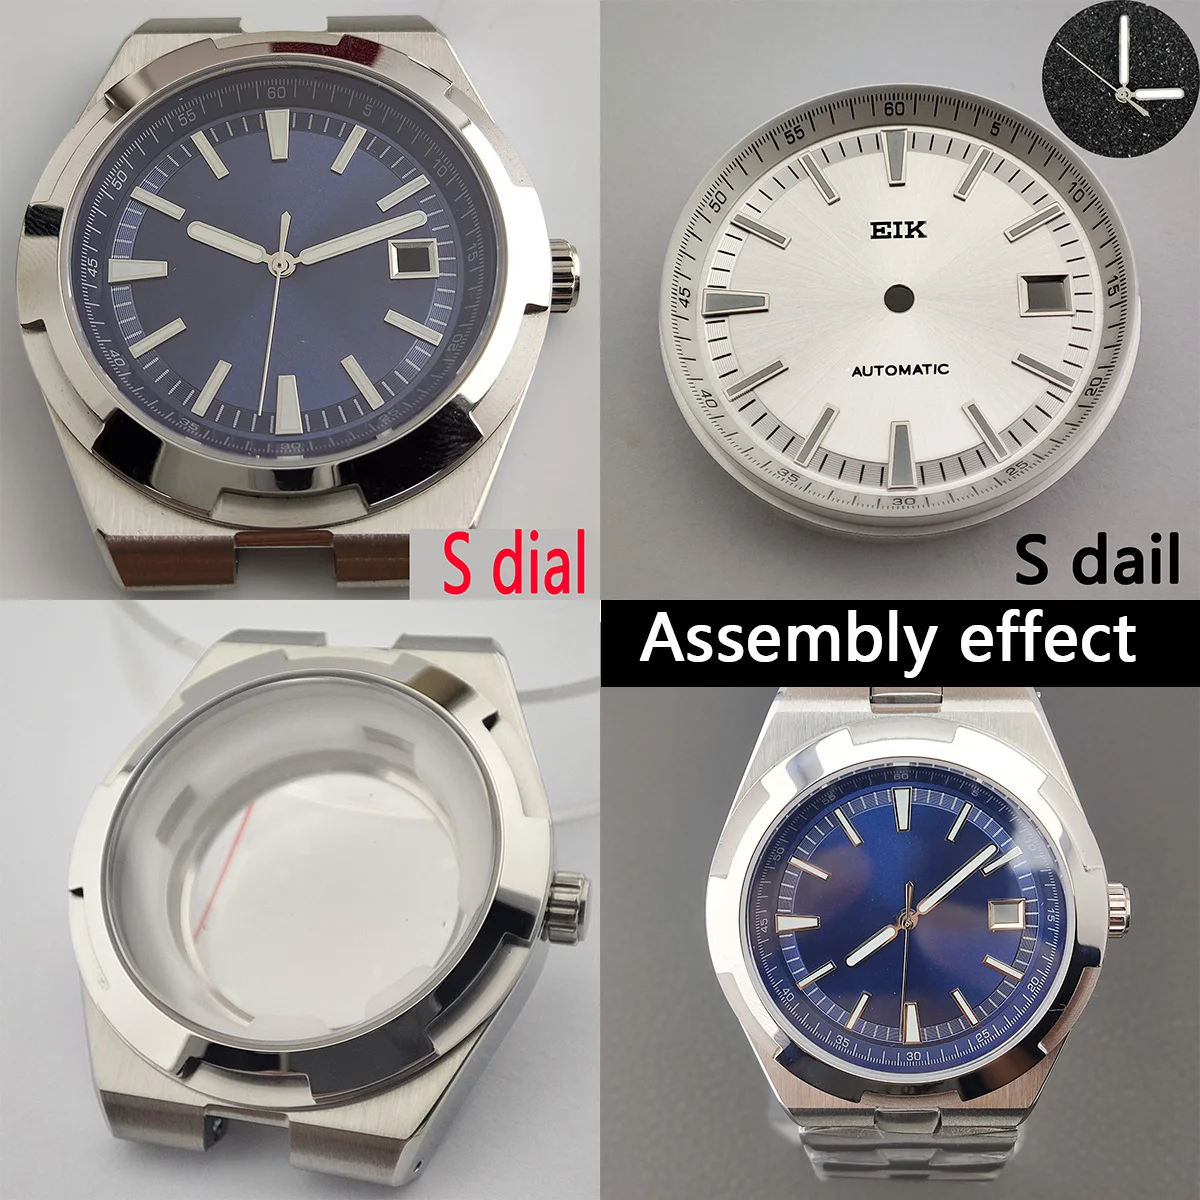 

Miyota 8215 nh35 case 41mm Watch case Add aluminum bezel stainless steel watch accessories case fit dg 2813 movement